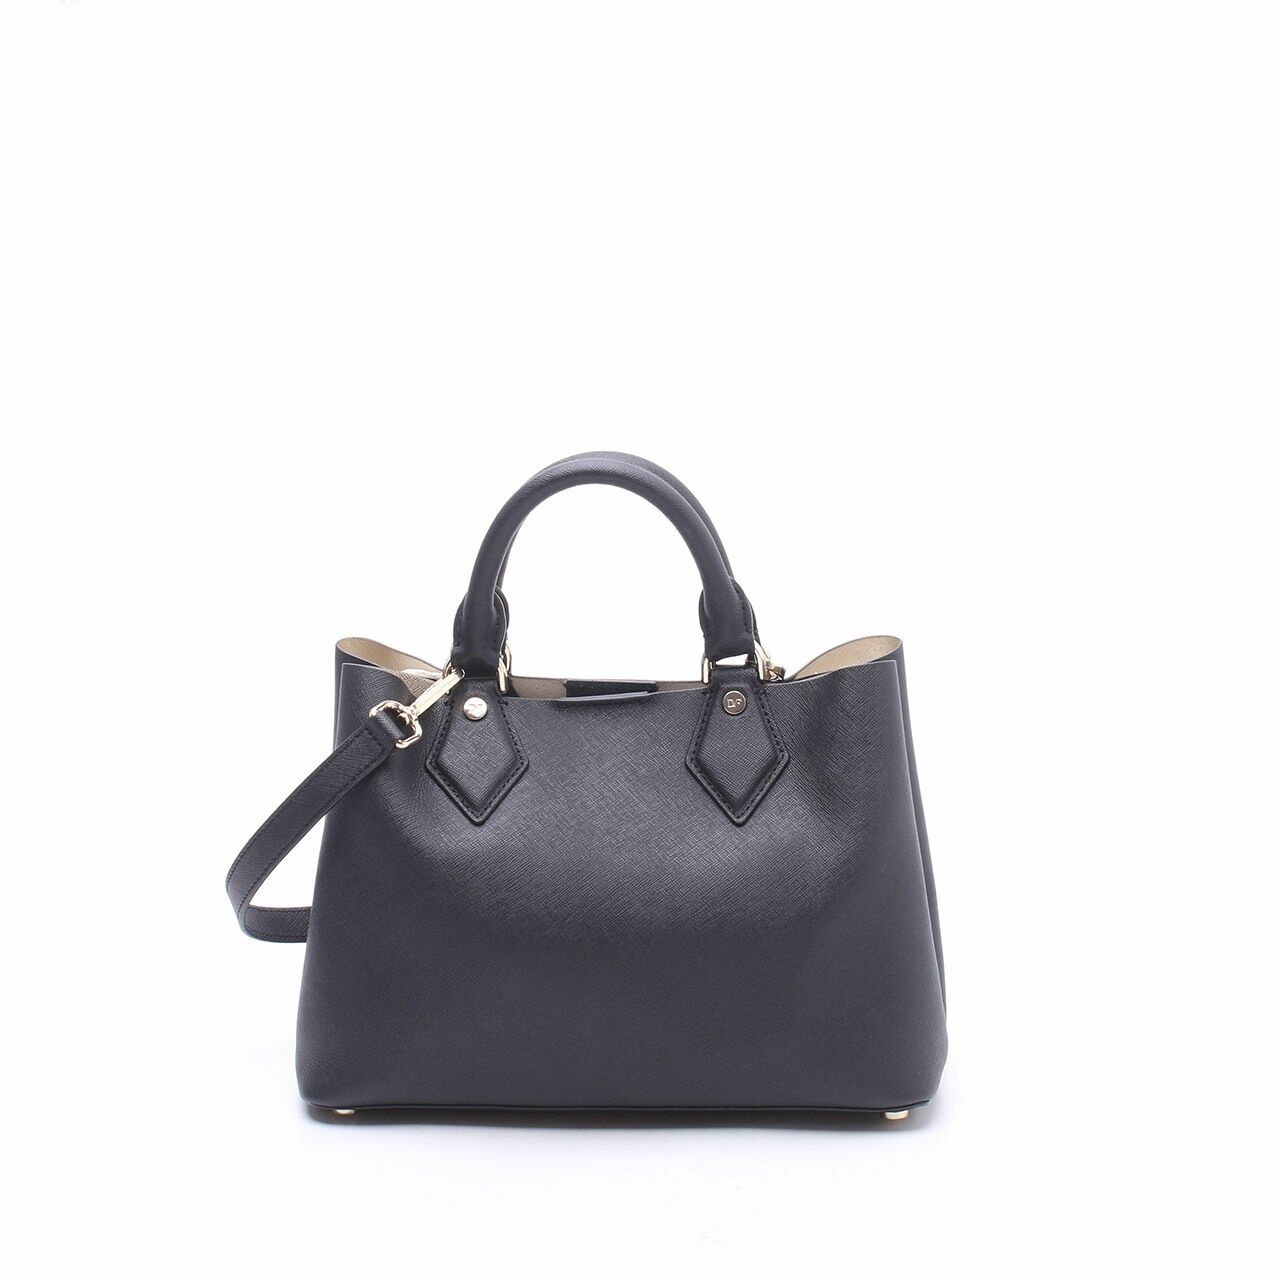 Diane von Furstenberg Women's Voyage on-the-Go Small Leather Carryall Black Satchel Bag